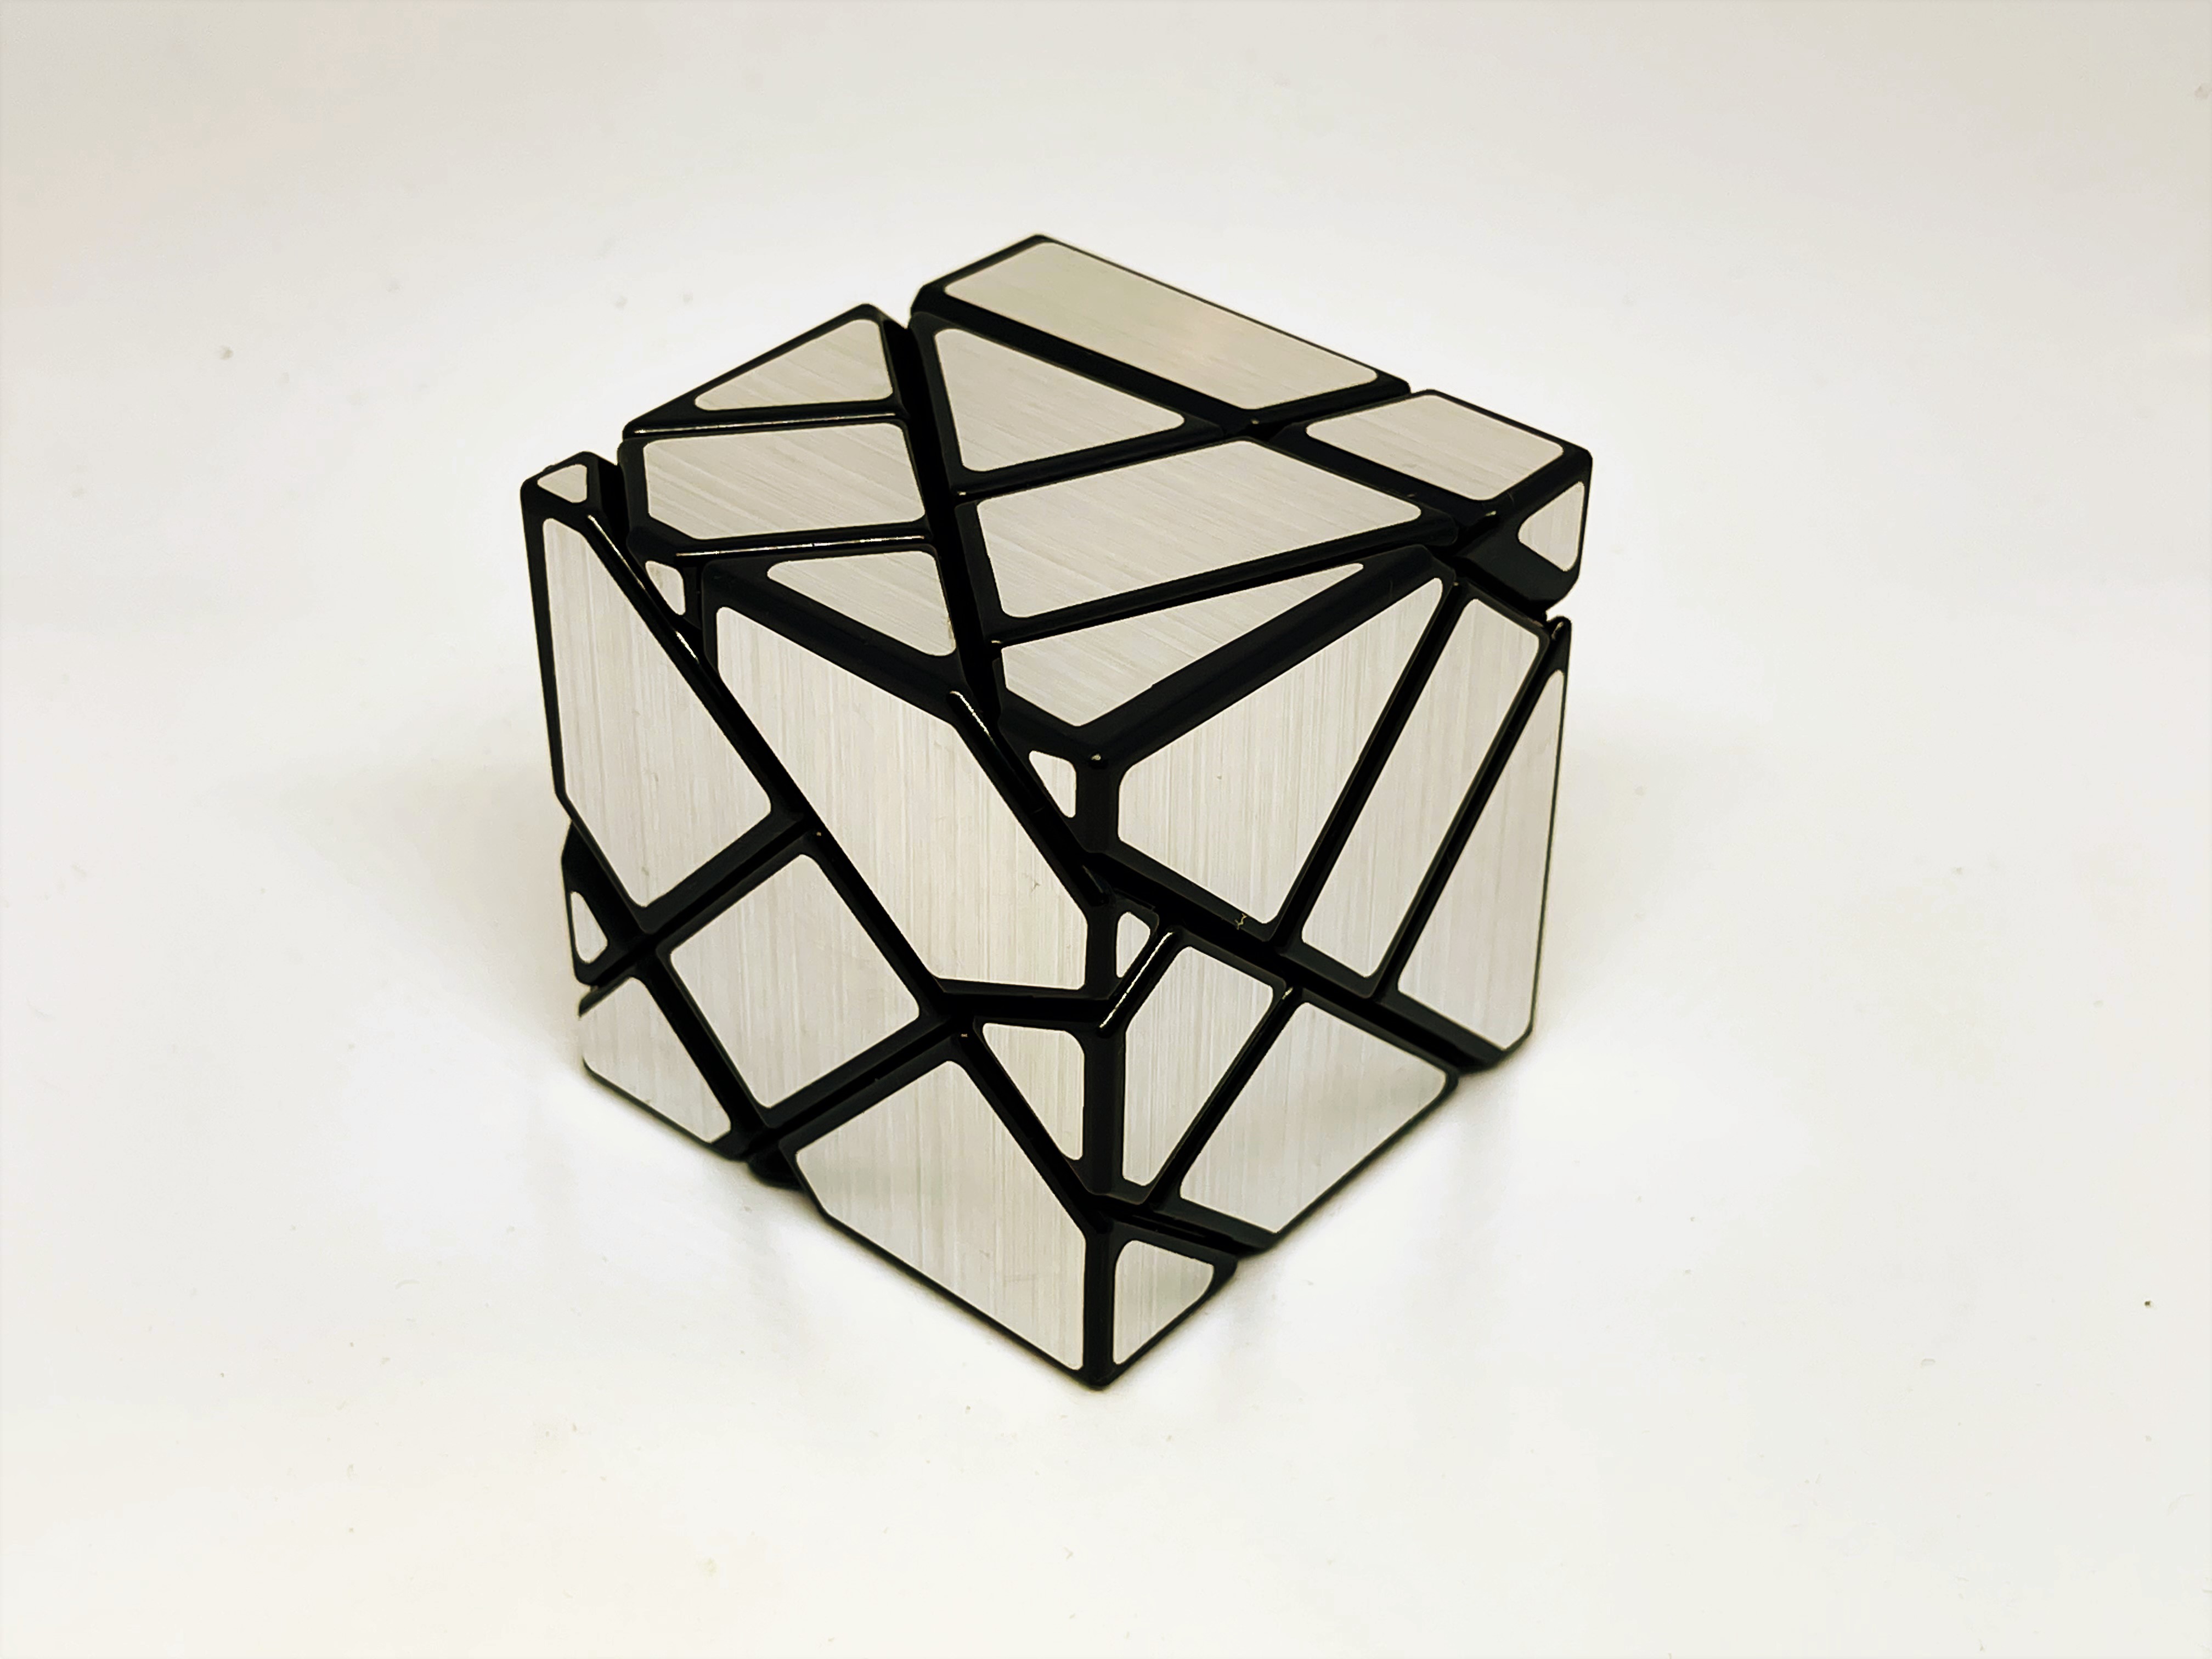 Vs cube. Ghost Cube 3x3. Ghost Cube 7x7. Ghost Cube 3x3 разобранный. Fangcun Ghost 3x3x3 Mirror Blocks.